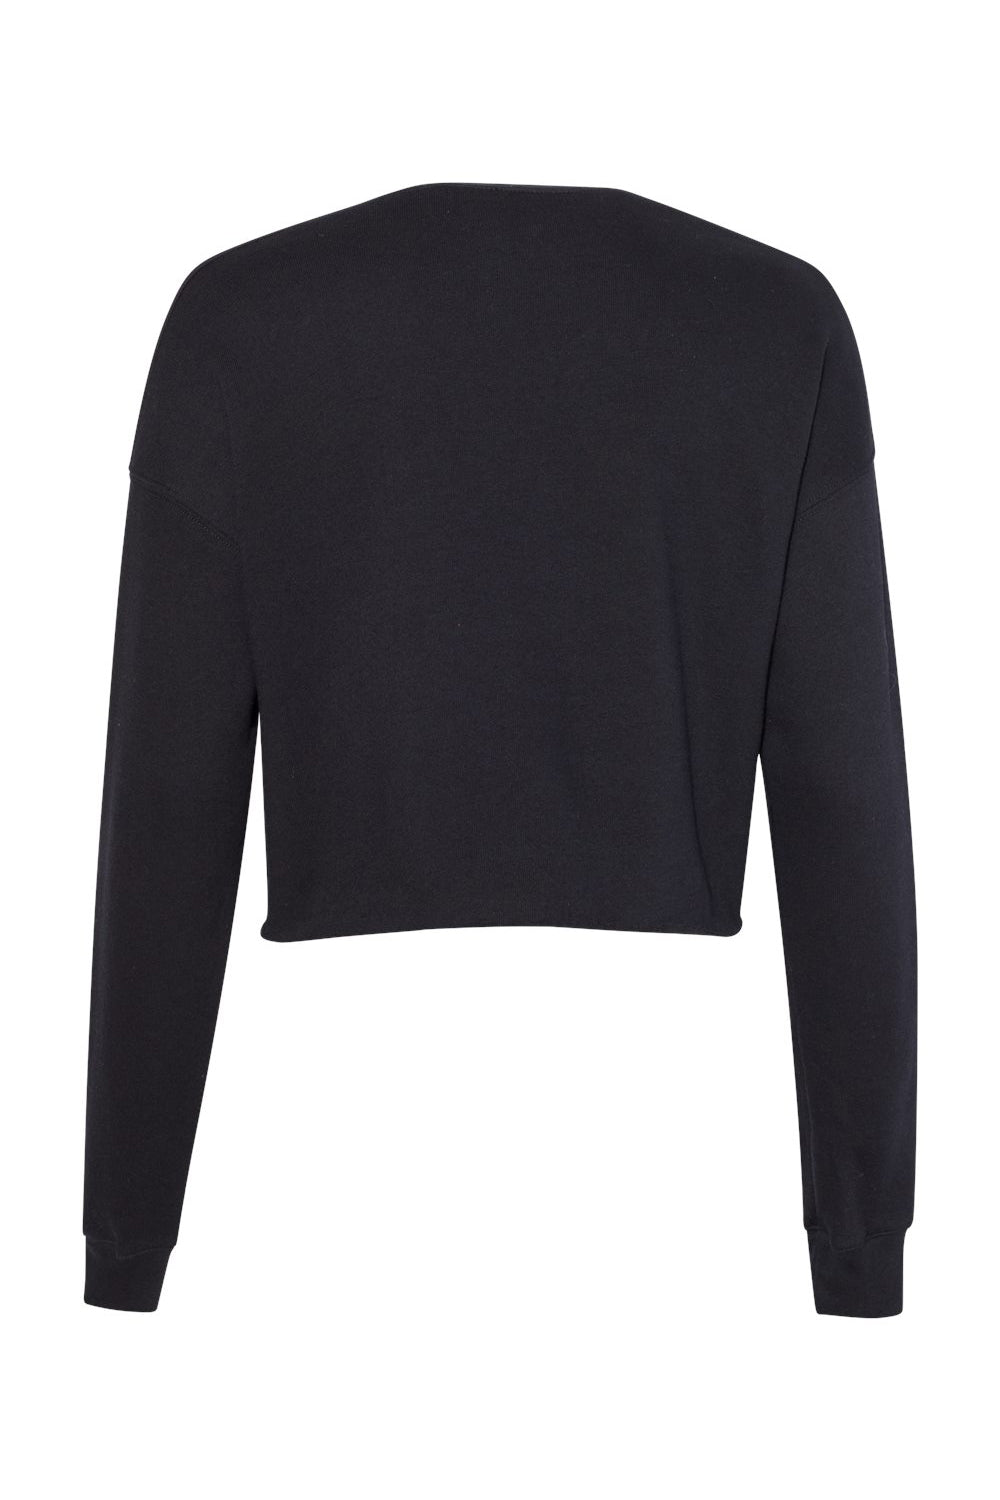 Bella + Canvas B7503/7503 Womens Cropped Fleece Crewneck Sweatshirt Black Flat Back